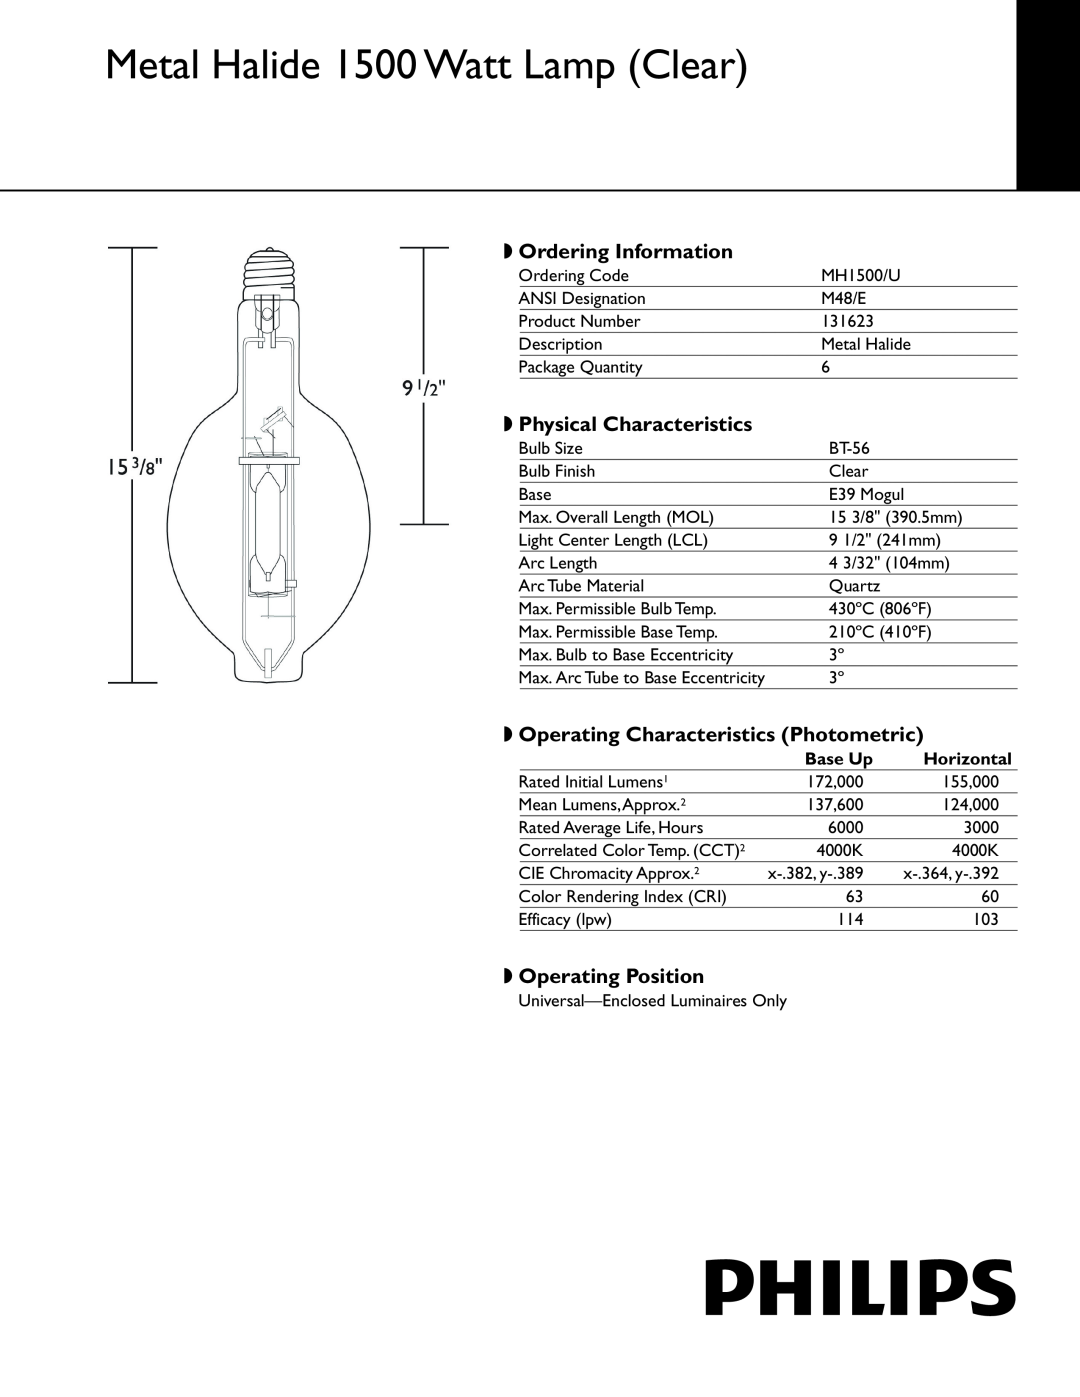 Philips 131623 manual Base Up, Horizontal, Metal Halide 1500 Watt Lamp Clear, Ordering Information, Operating Position 